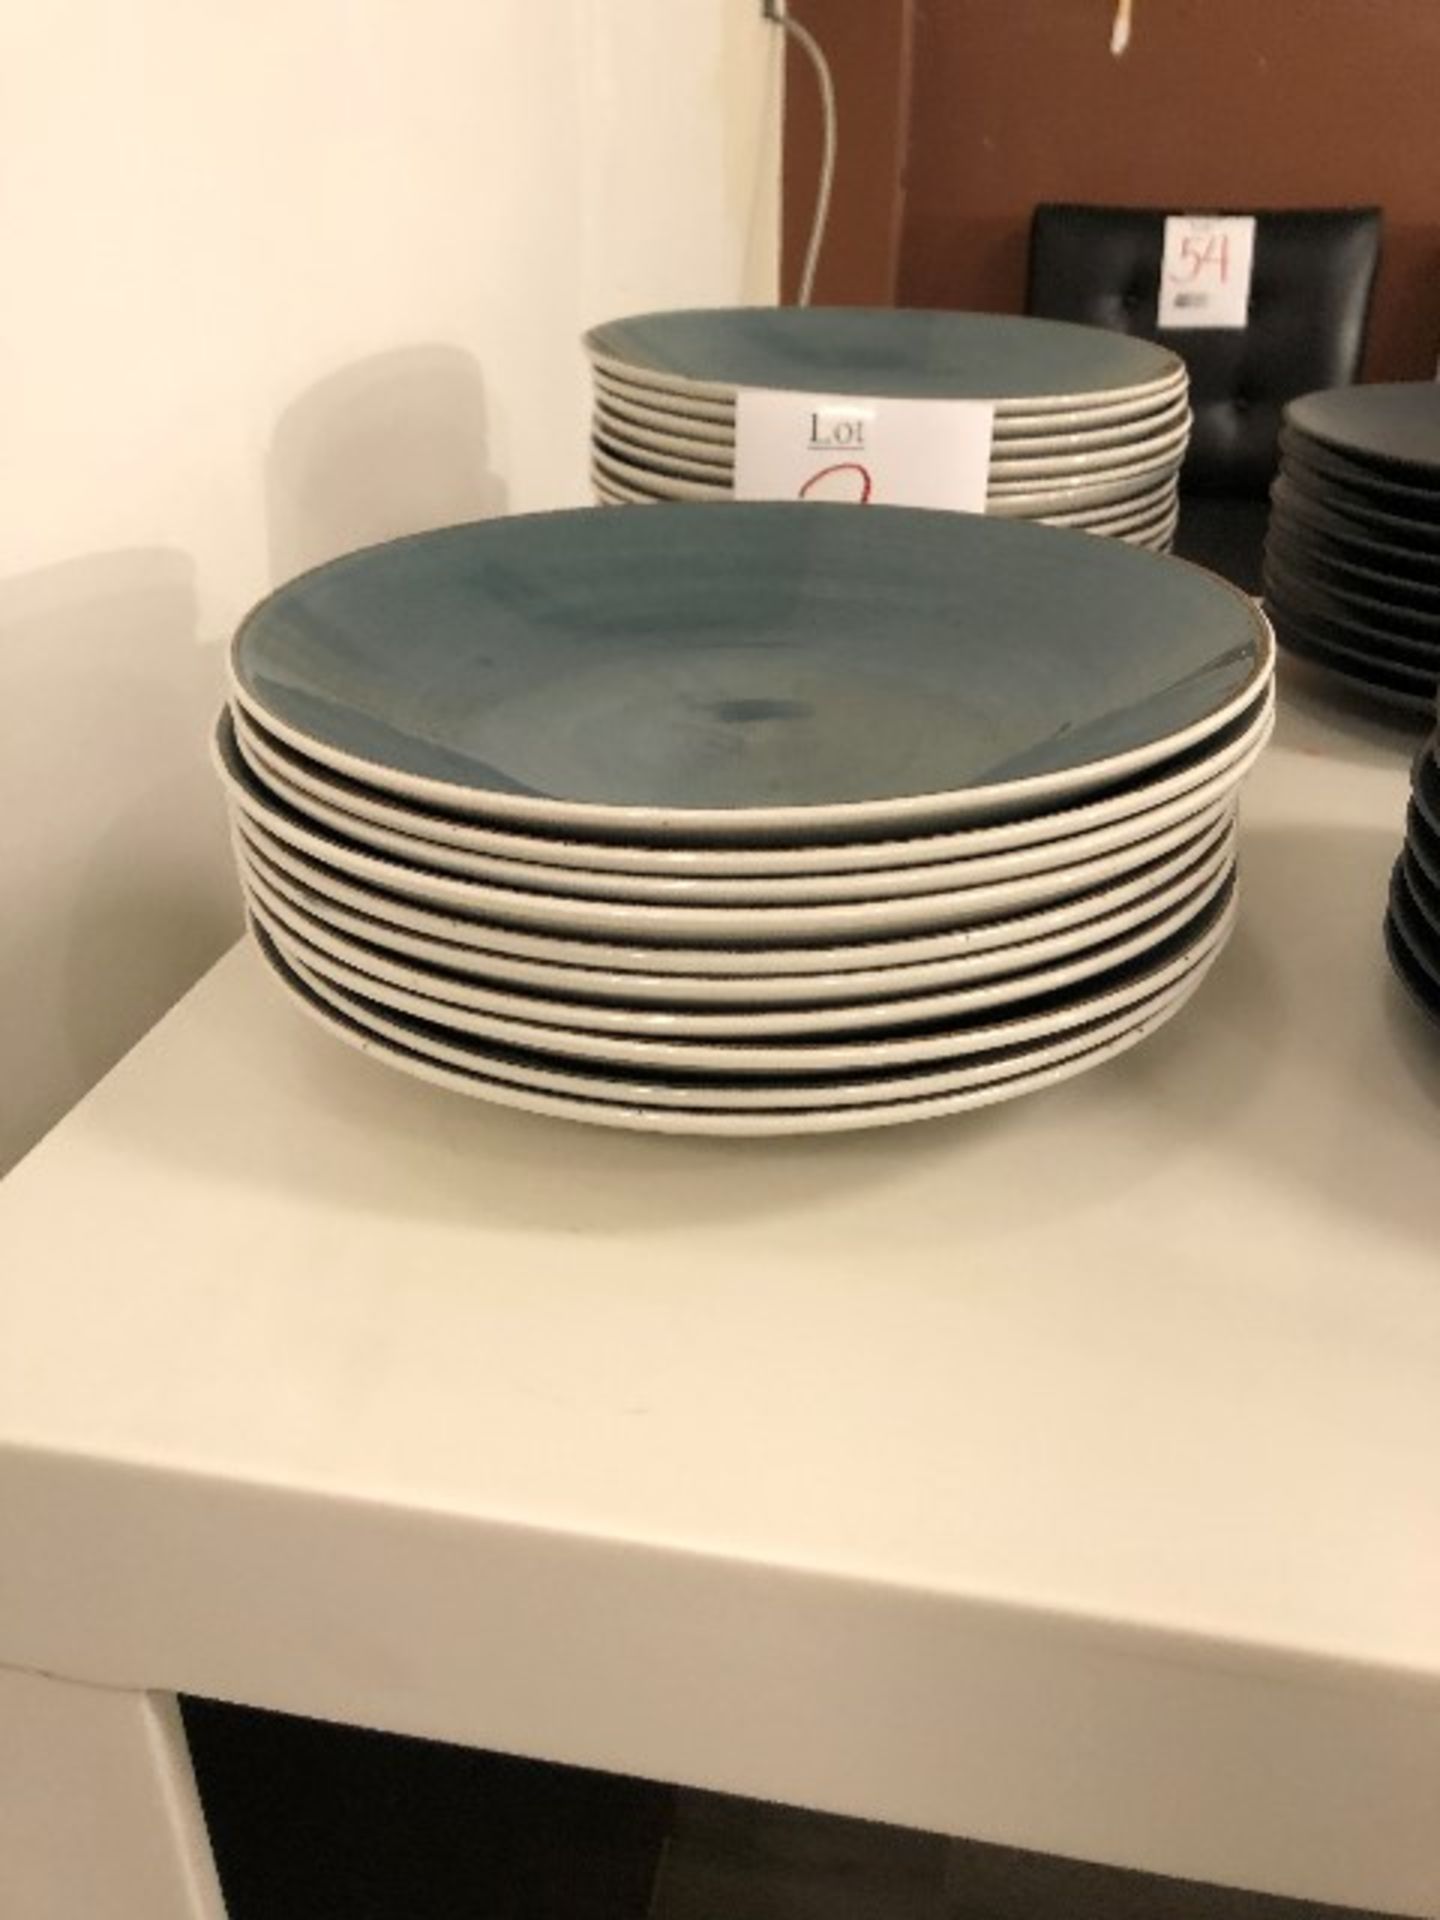 Round plates, 12”, 10 pcs (Lot)